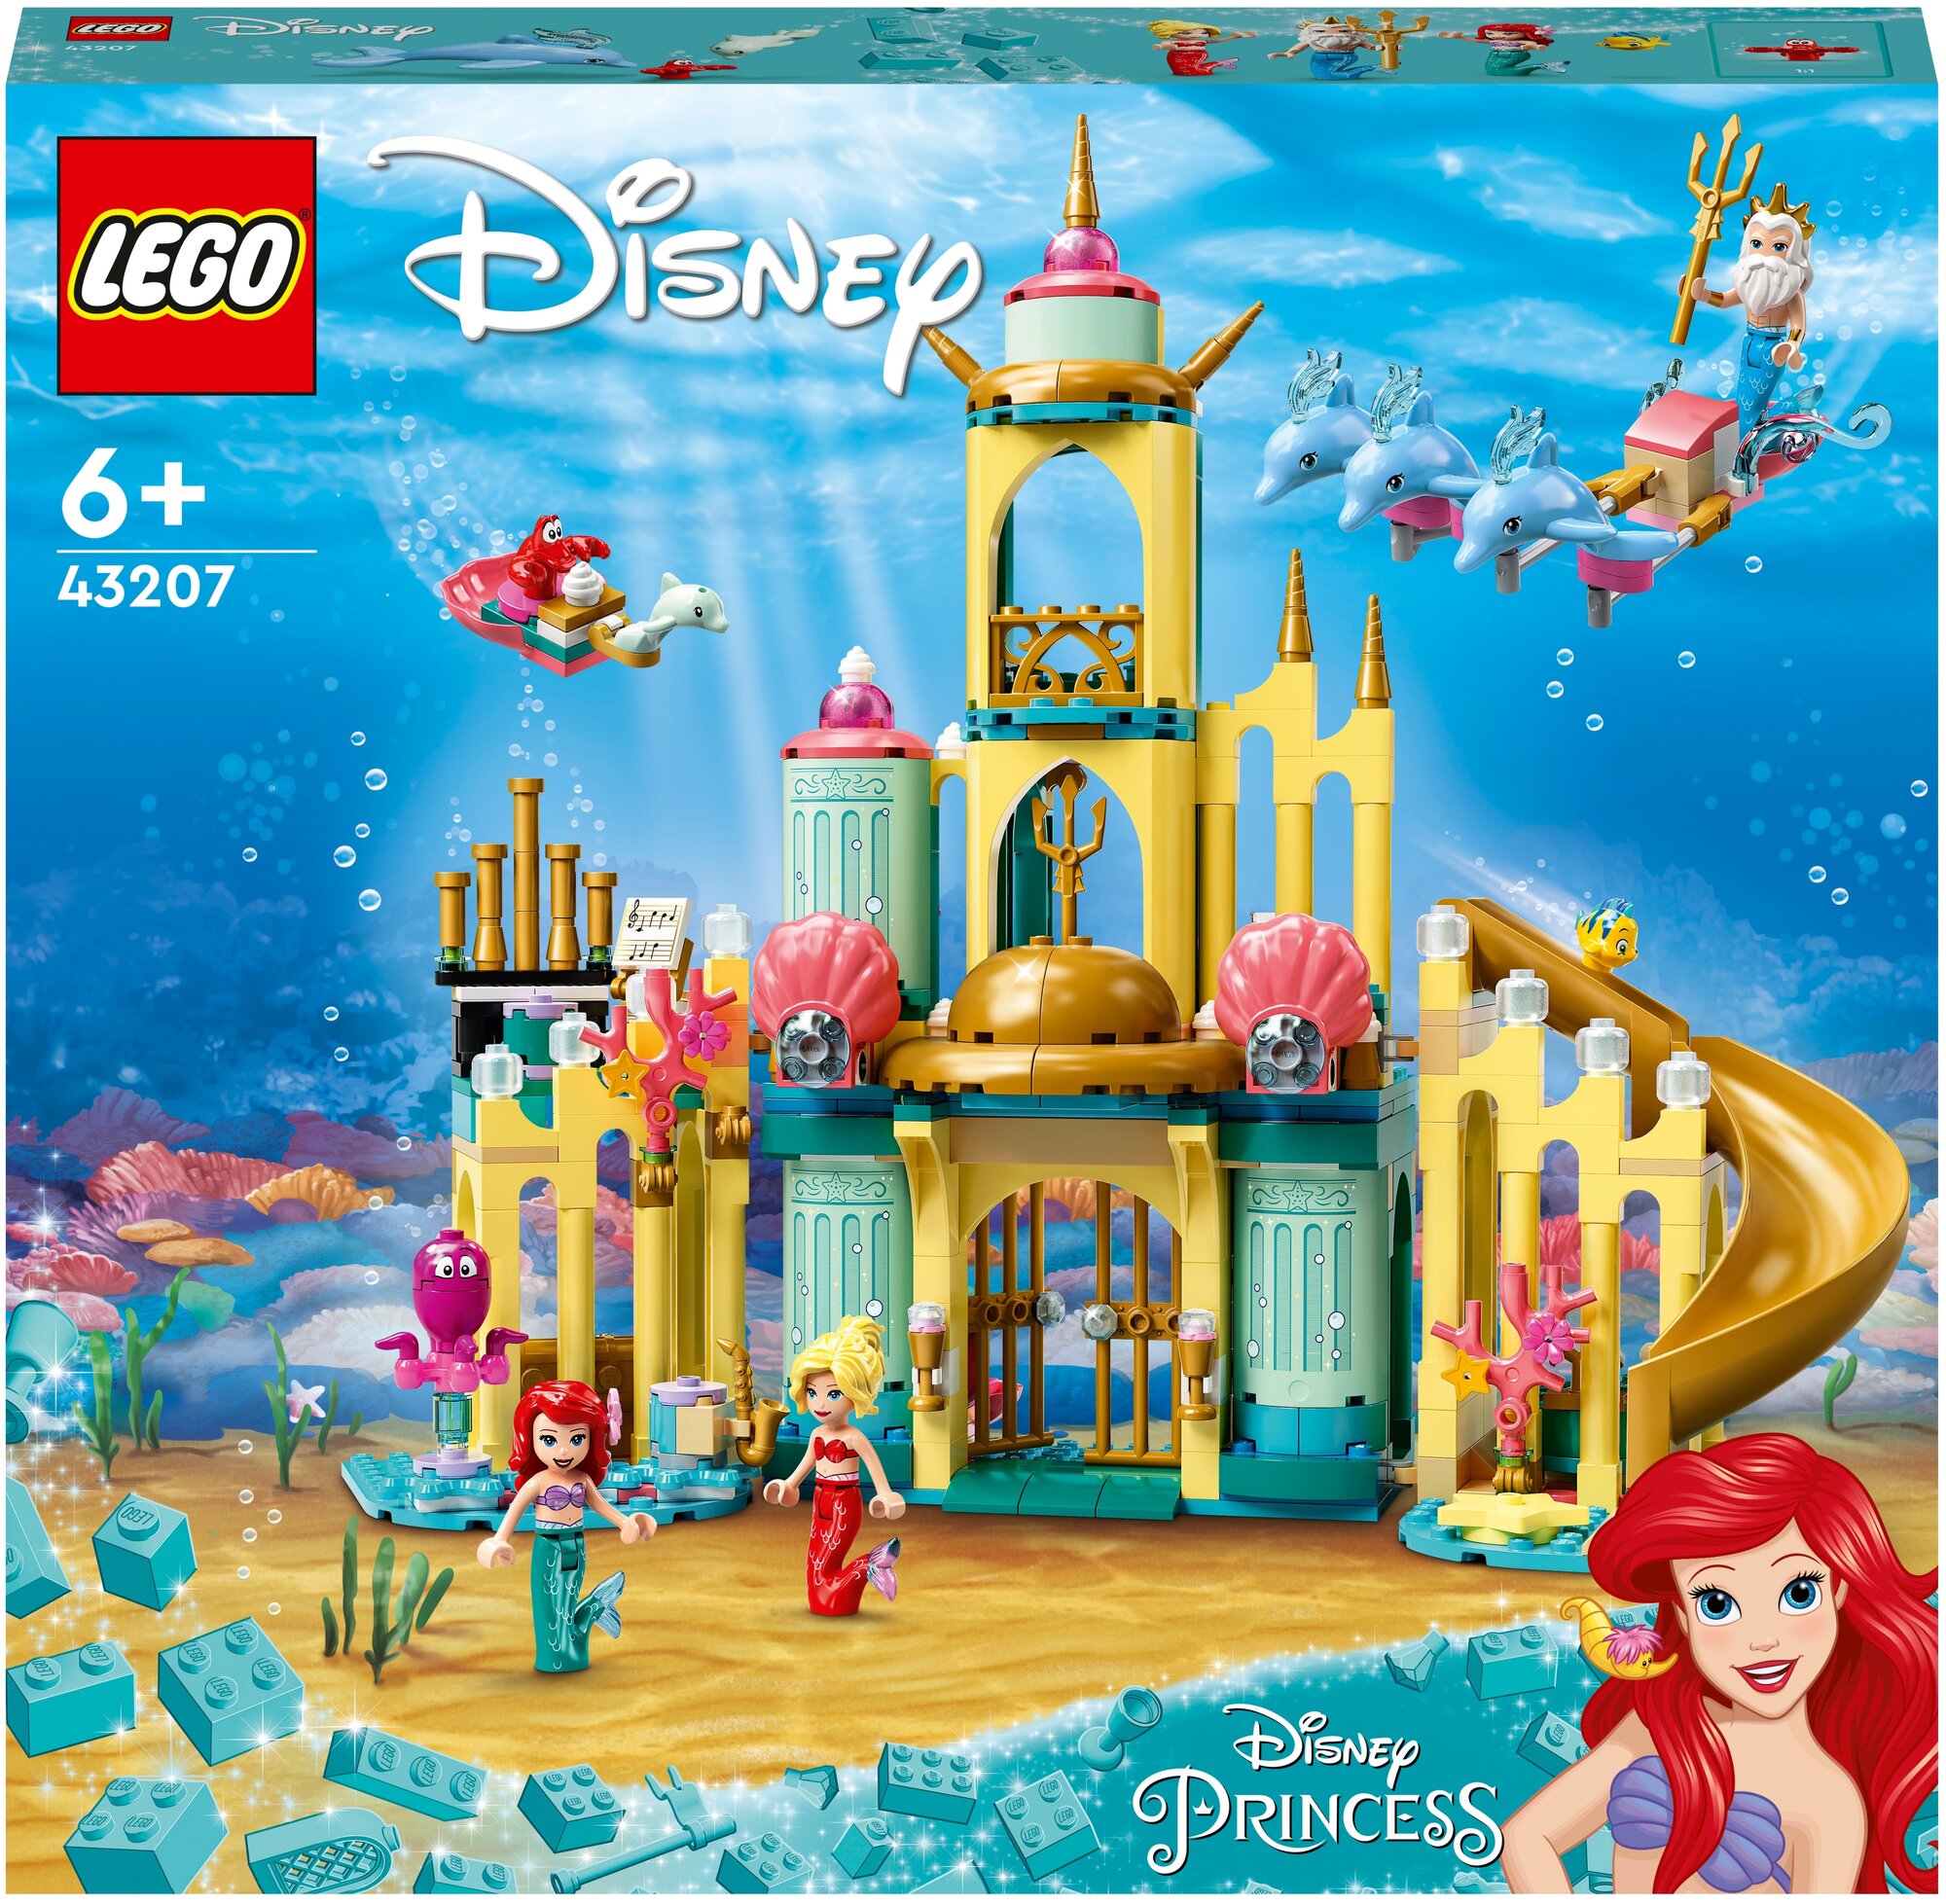 LEGO Disney Princess 43207 - Princess Ariel's Underwater Palace 43207